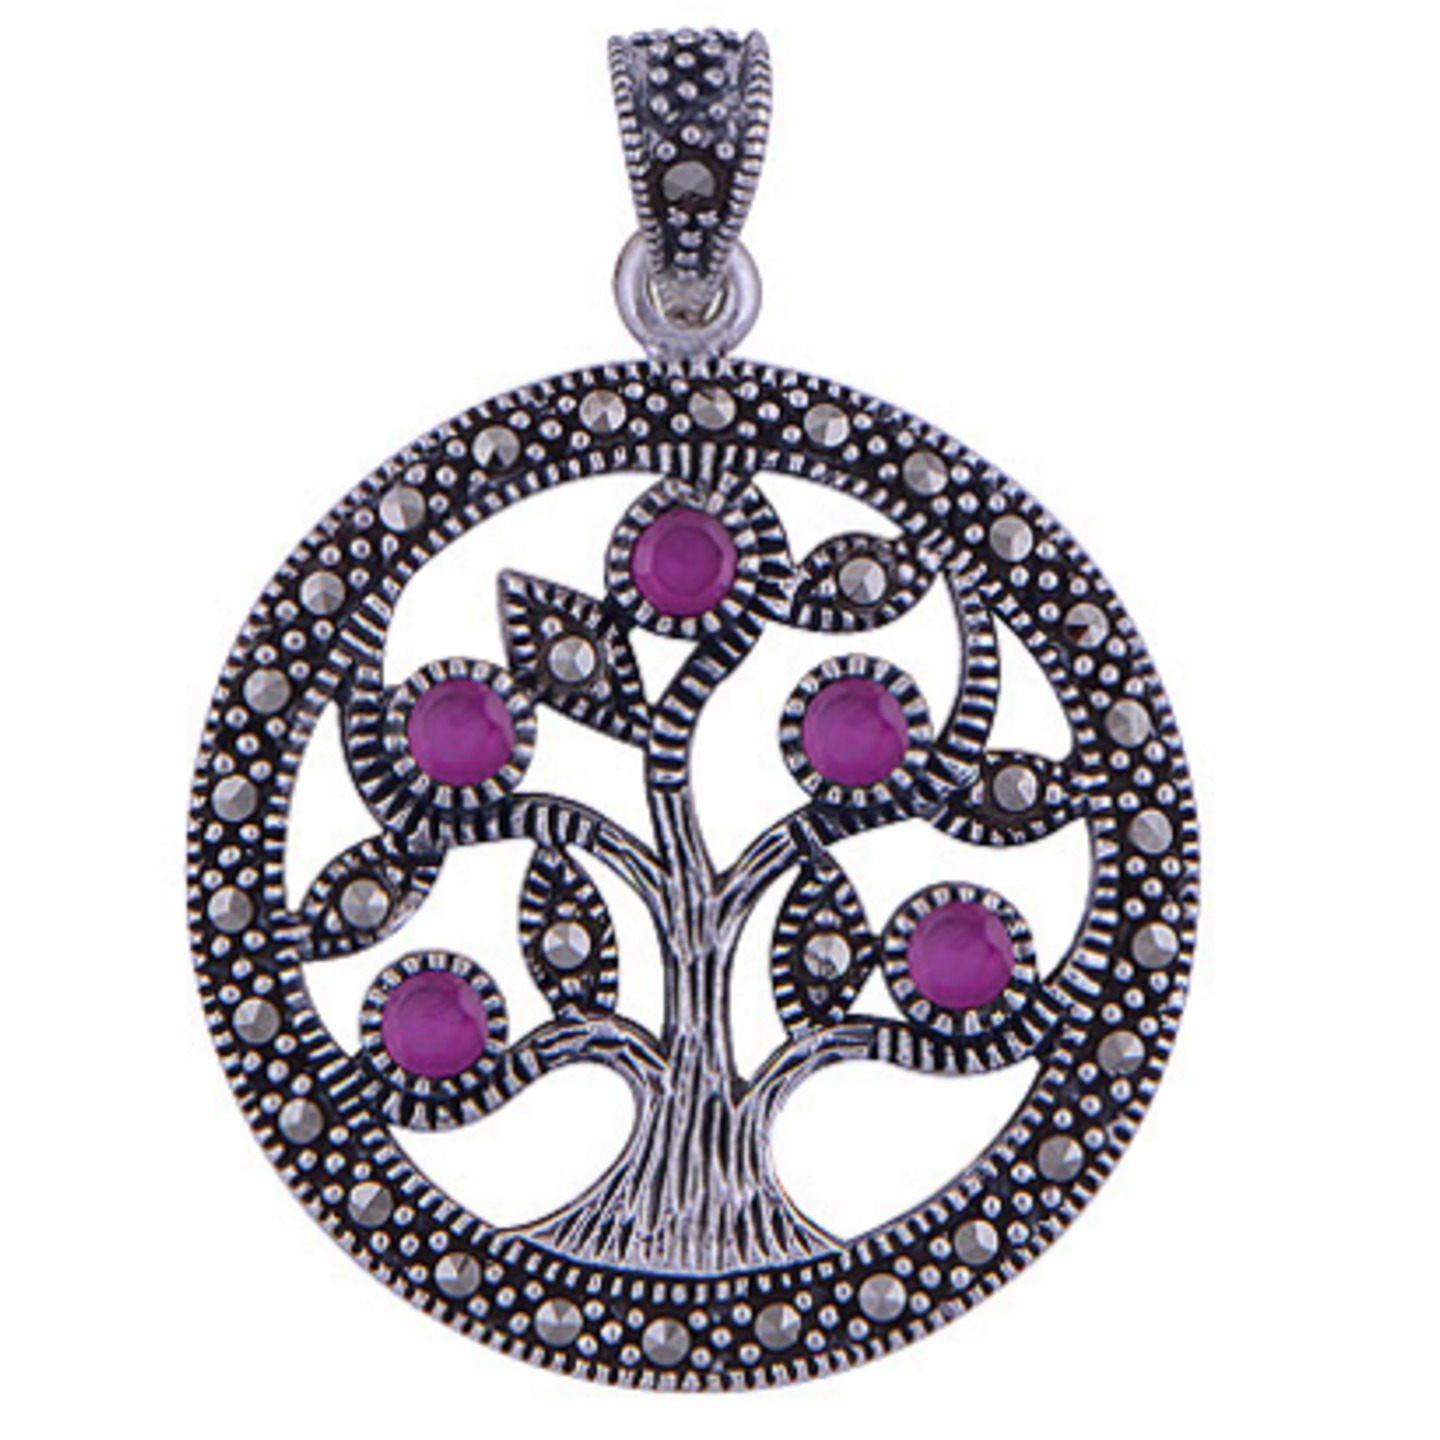 The Corundum Tree Of Life Silver Pendant